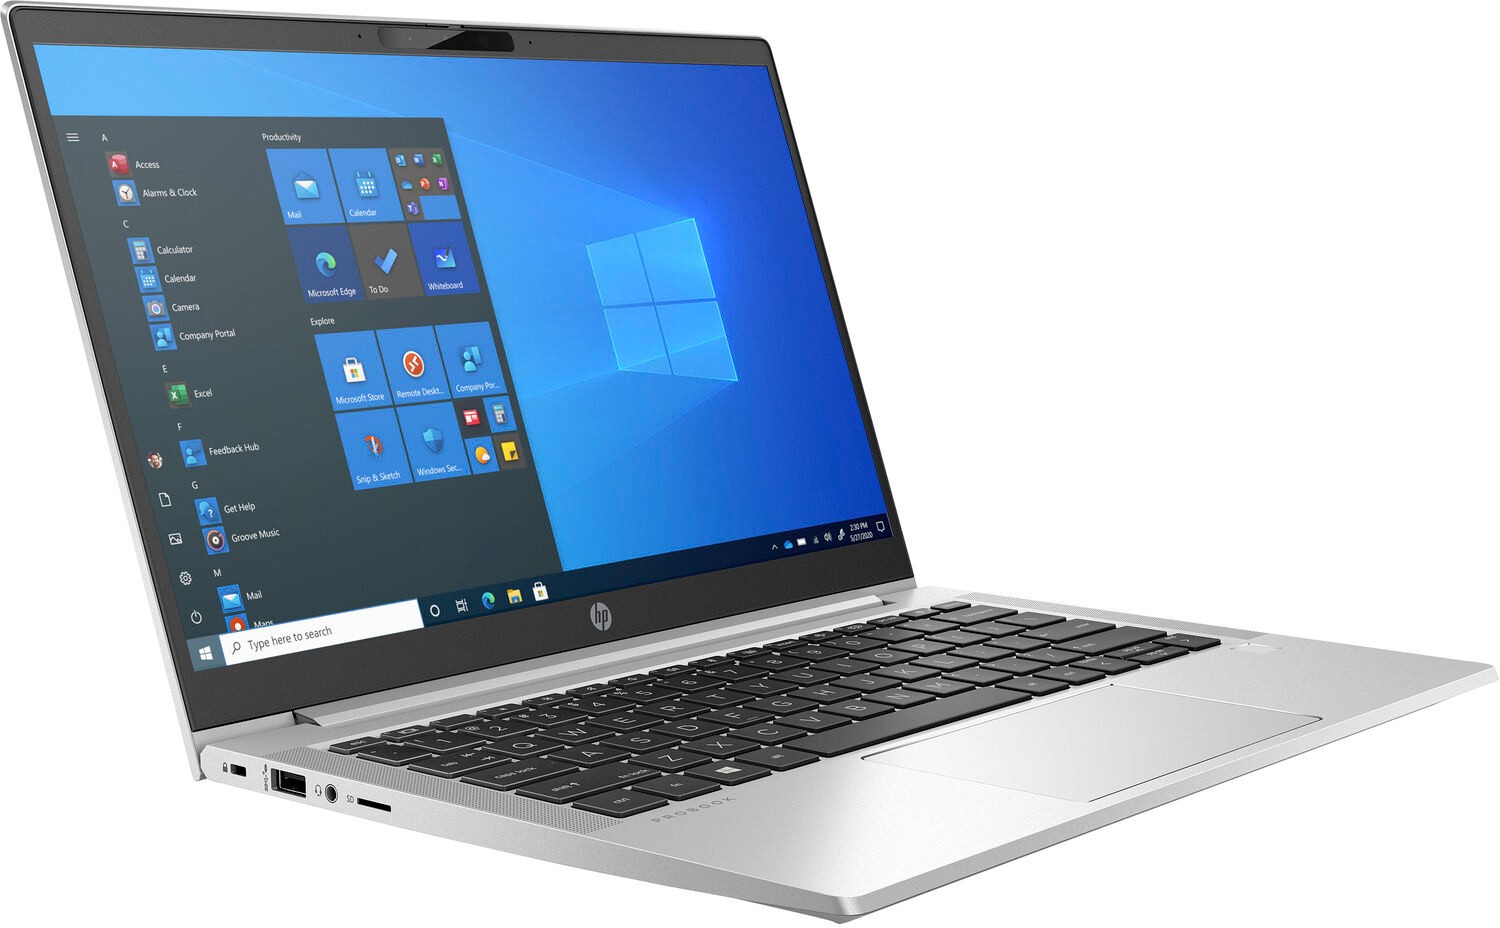 Ноутбук HP НP ProBook 430 G8 Core i7-1165G7 2.8GHz, 13.3 FHD (1920x1080) AG 8GB DDR4 (1),512GB SSD,45Wh LL,Service Door,FPR,1.5kg,1y,Silver,DOS-39391